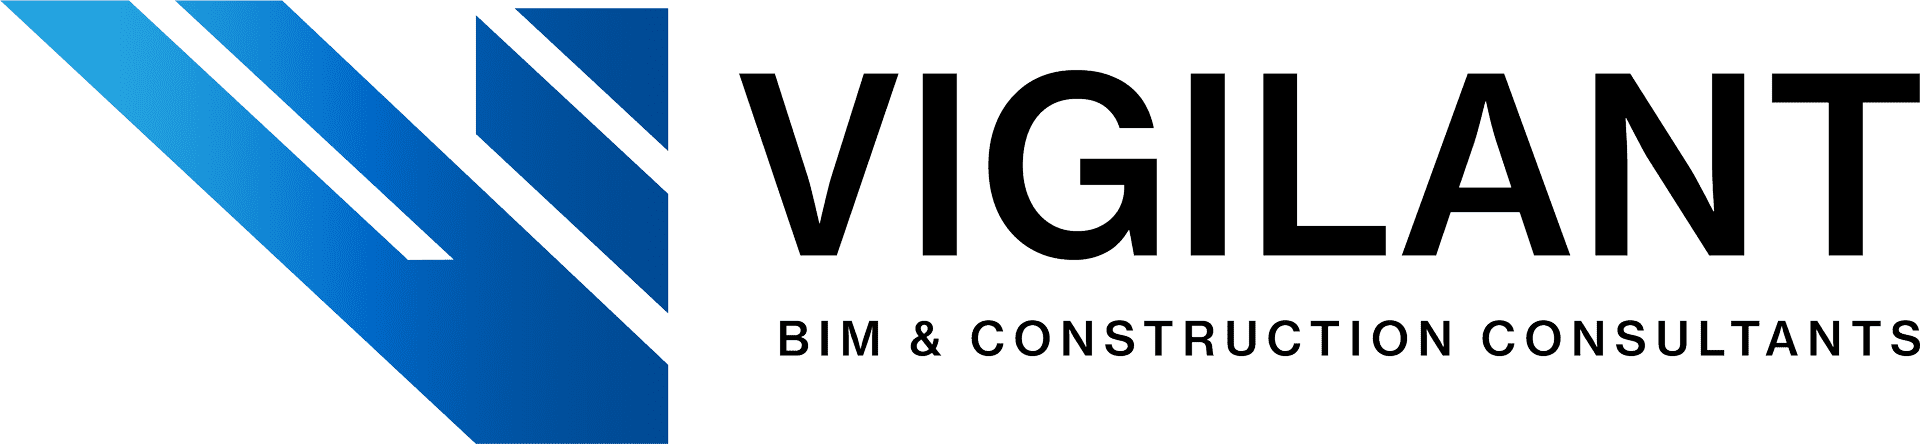 Vigilant BIM Construction Consultants